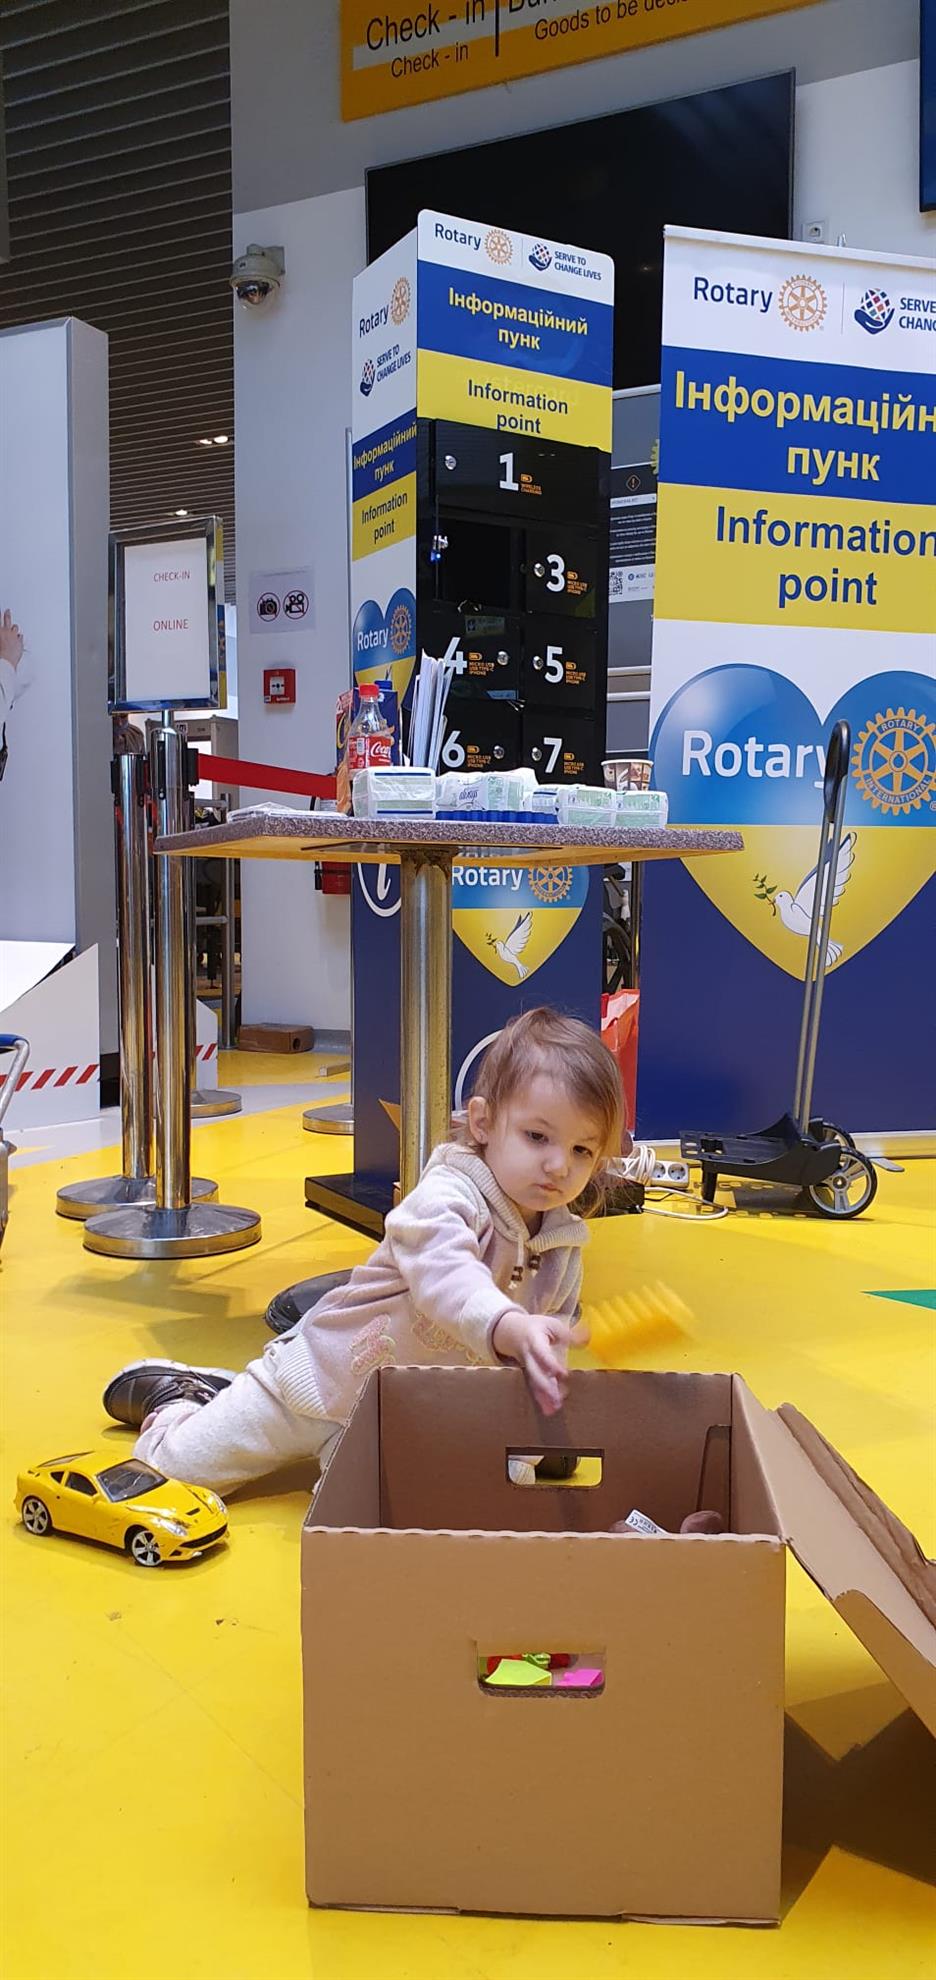 Rotary Helping Ukraine  Rotary Club of Westmount